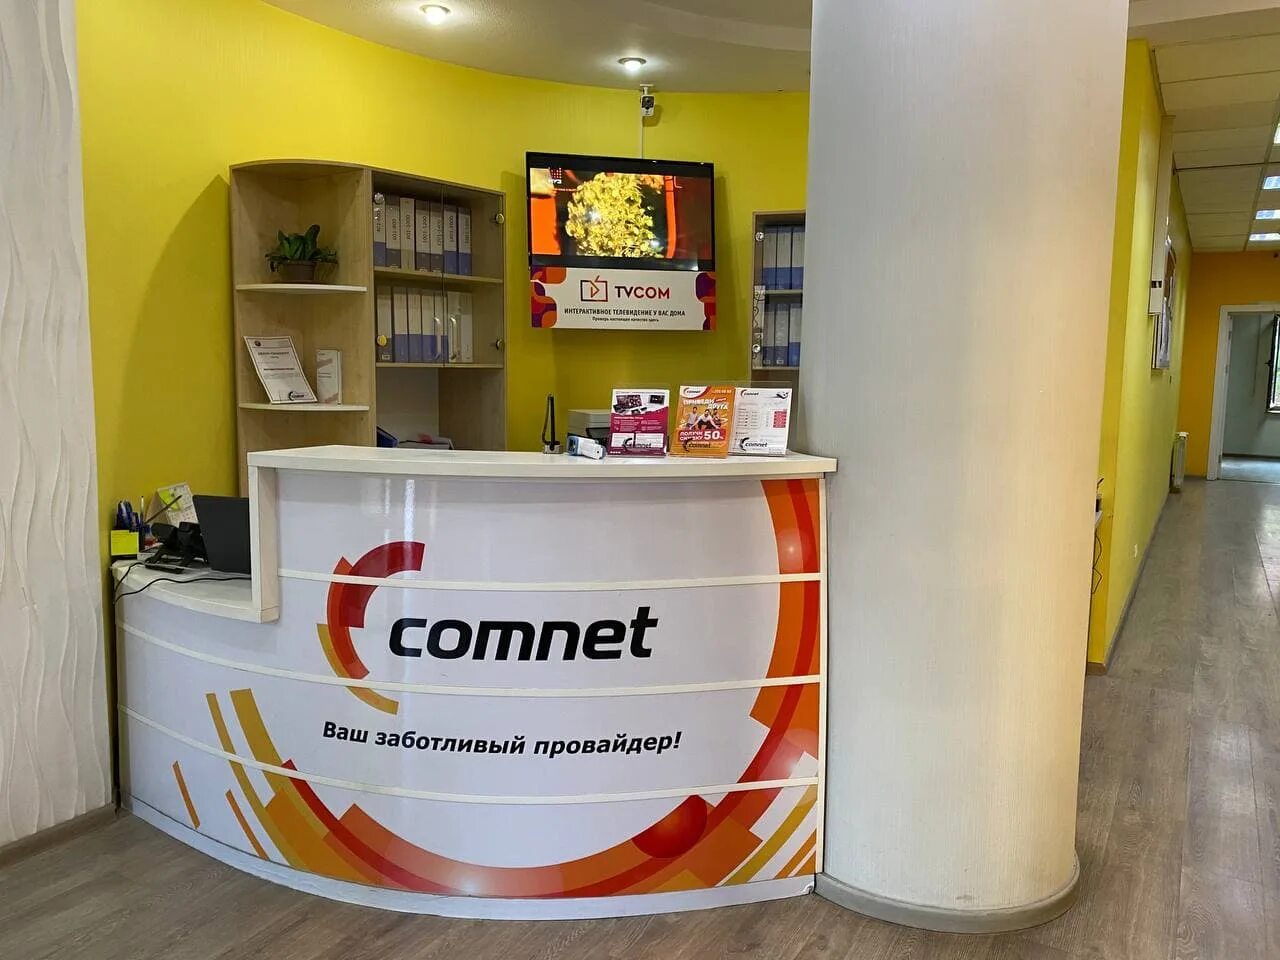 Comnet uz. Ташкент улица Шахрисабз 10b COMNET. Интернет-провайдер COMNET. COMNET logo. Интернет провайдер Комнет Ташкент.